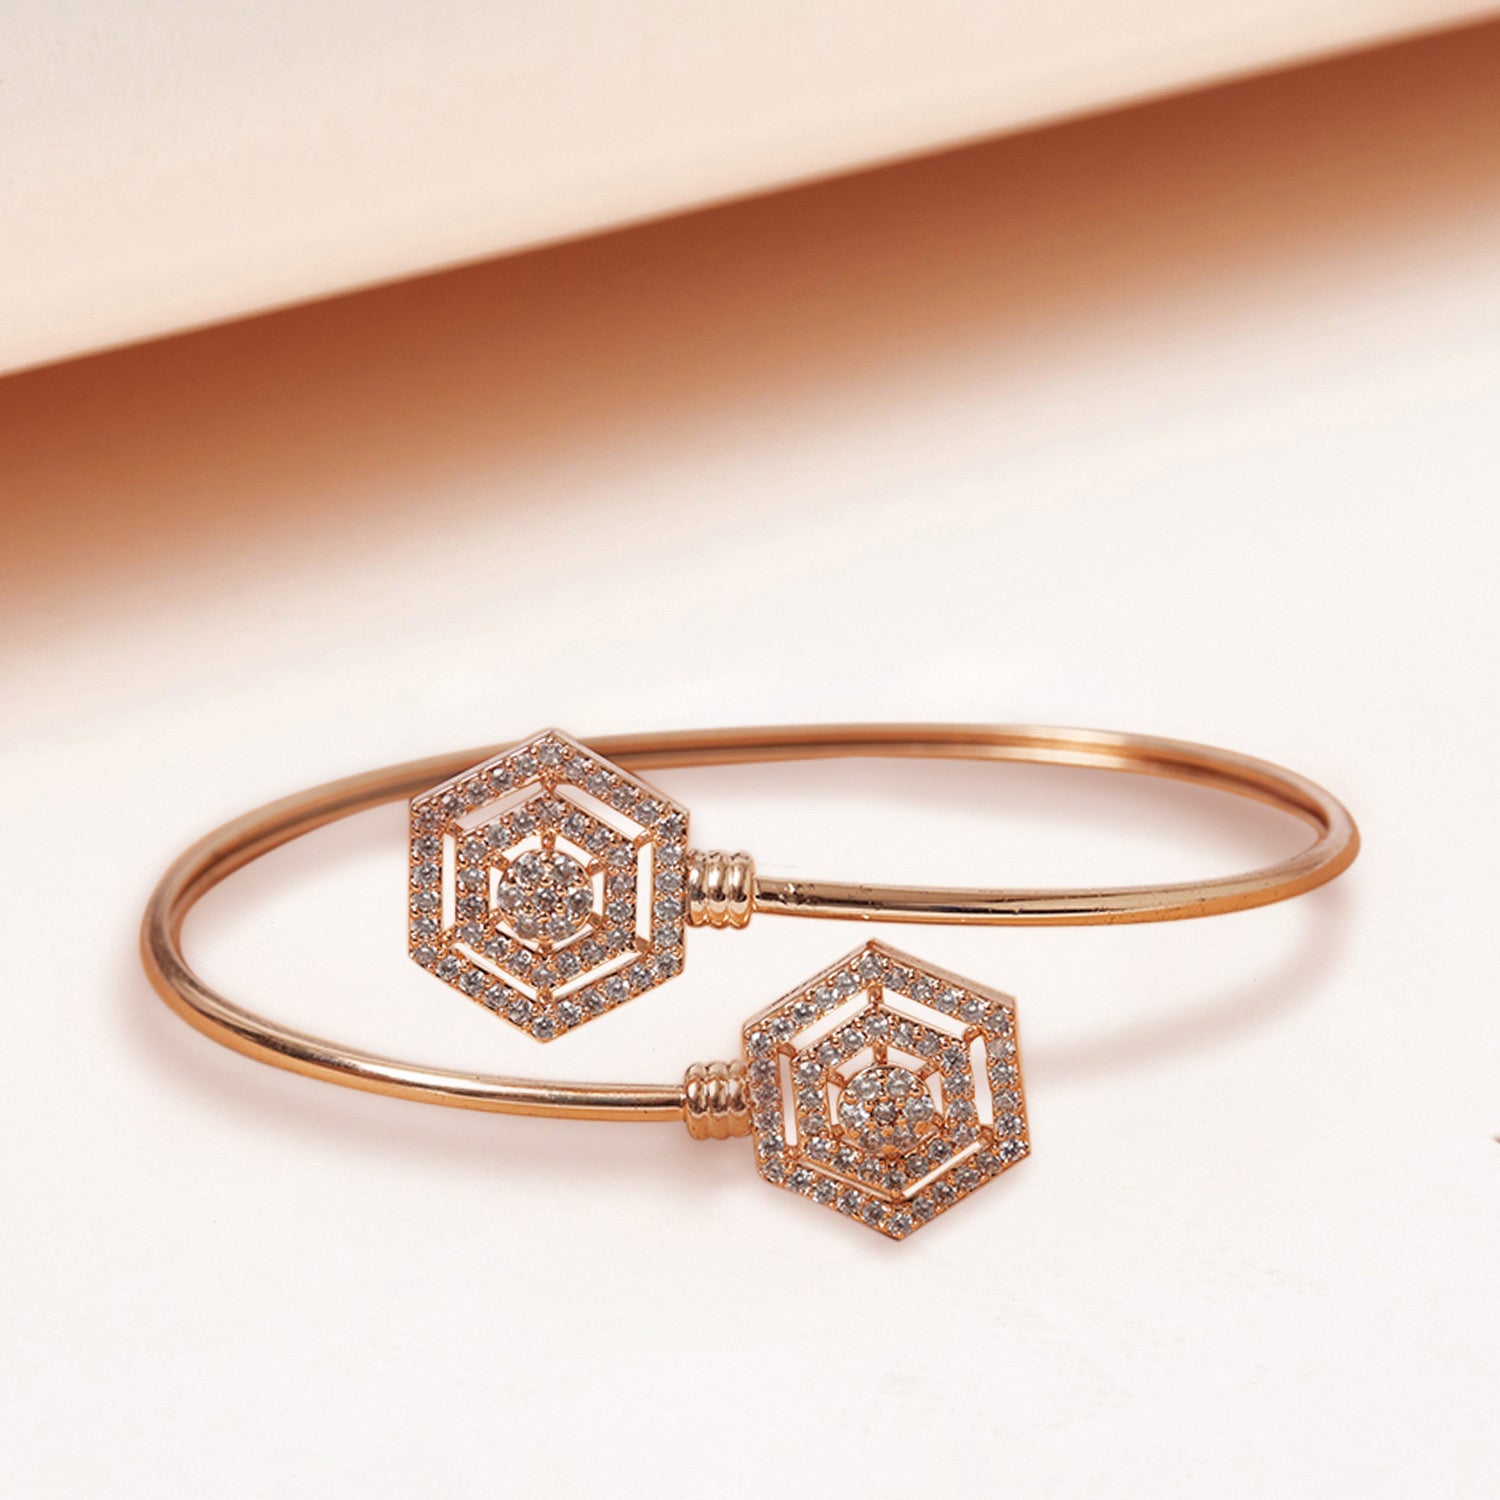 Rose Gold Bracelet with Modern Hexagon Design